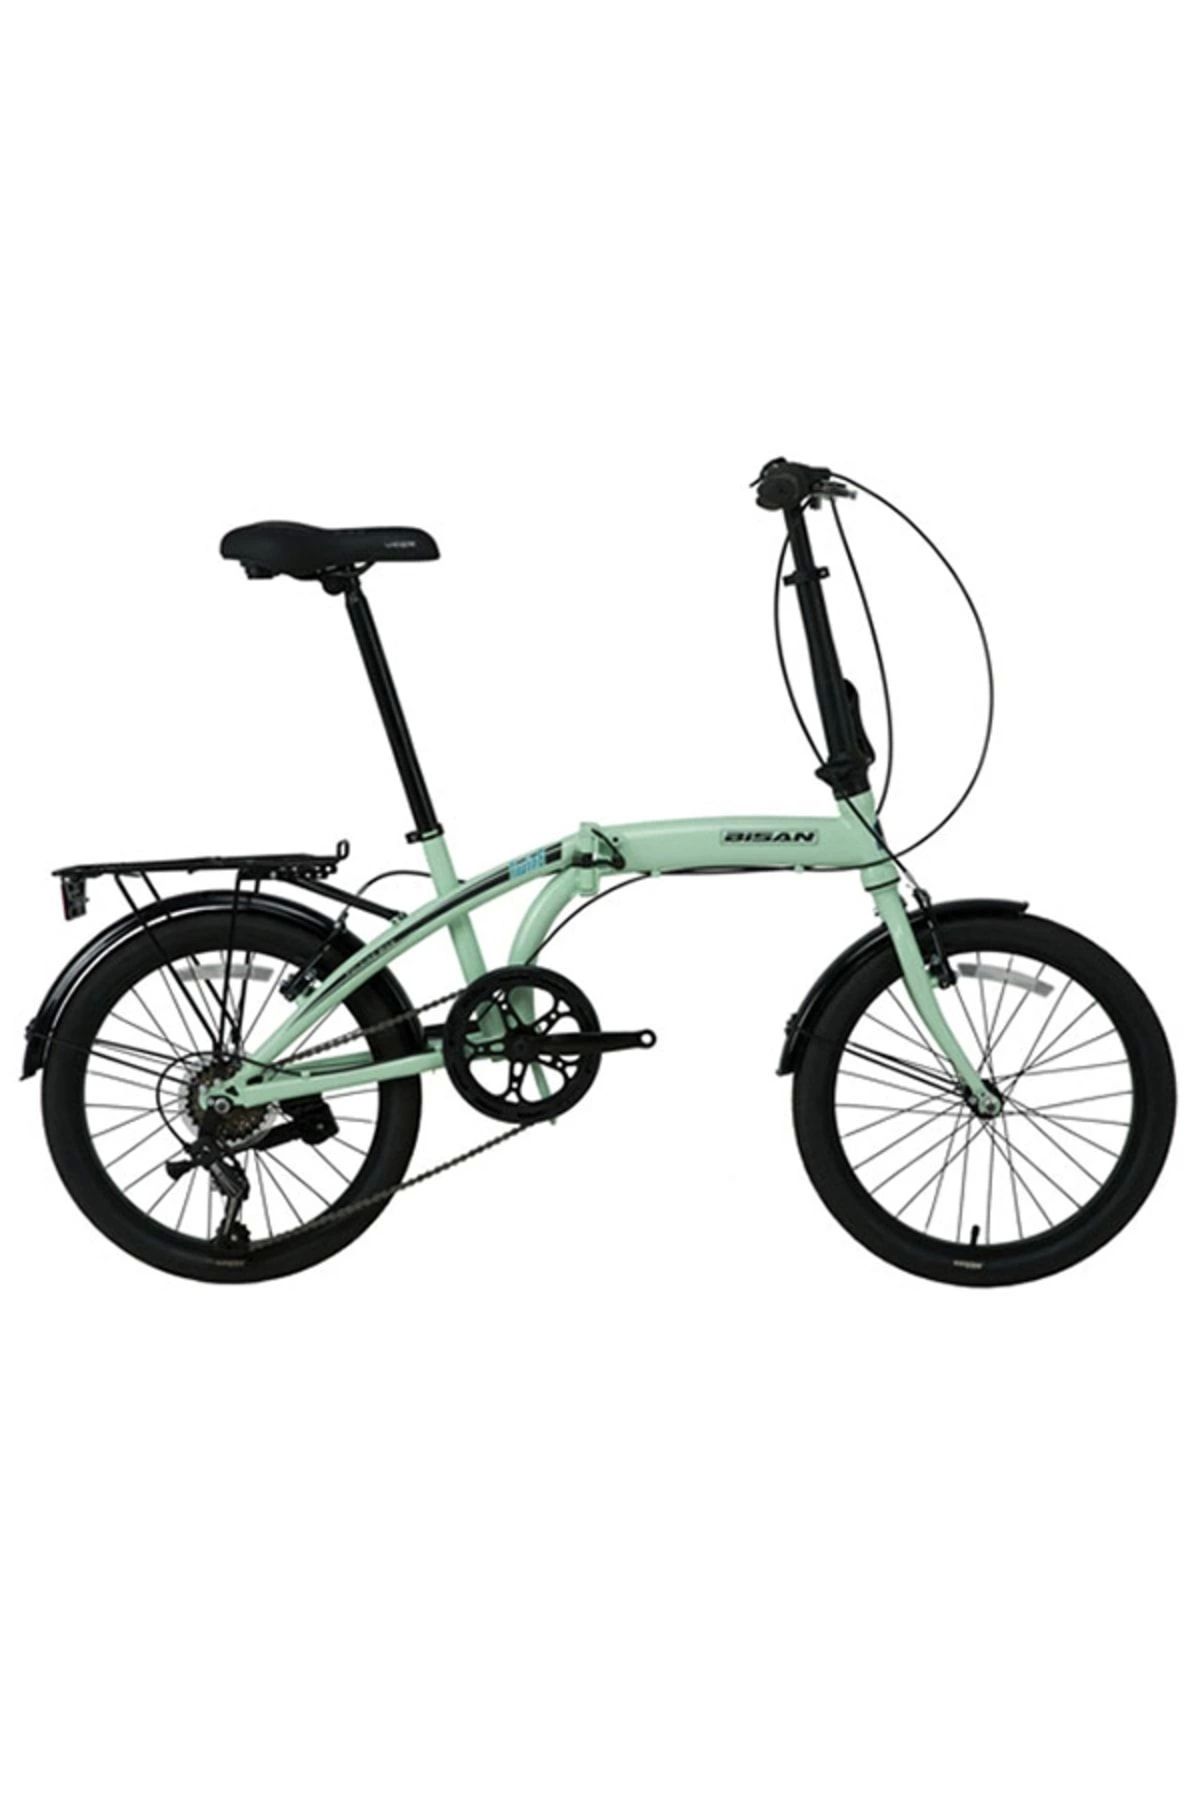 Bisan Twın-s Katlanır Bisiklet 28cm V 20 Jant 6 Vites Mint Yeşil Siyah